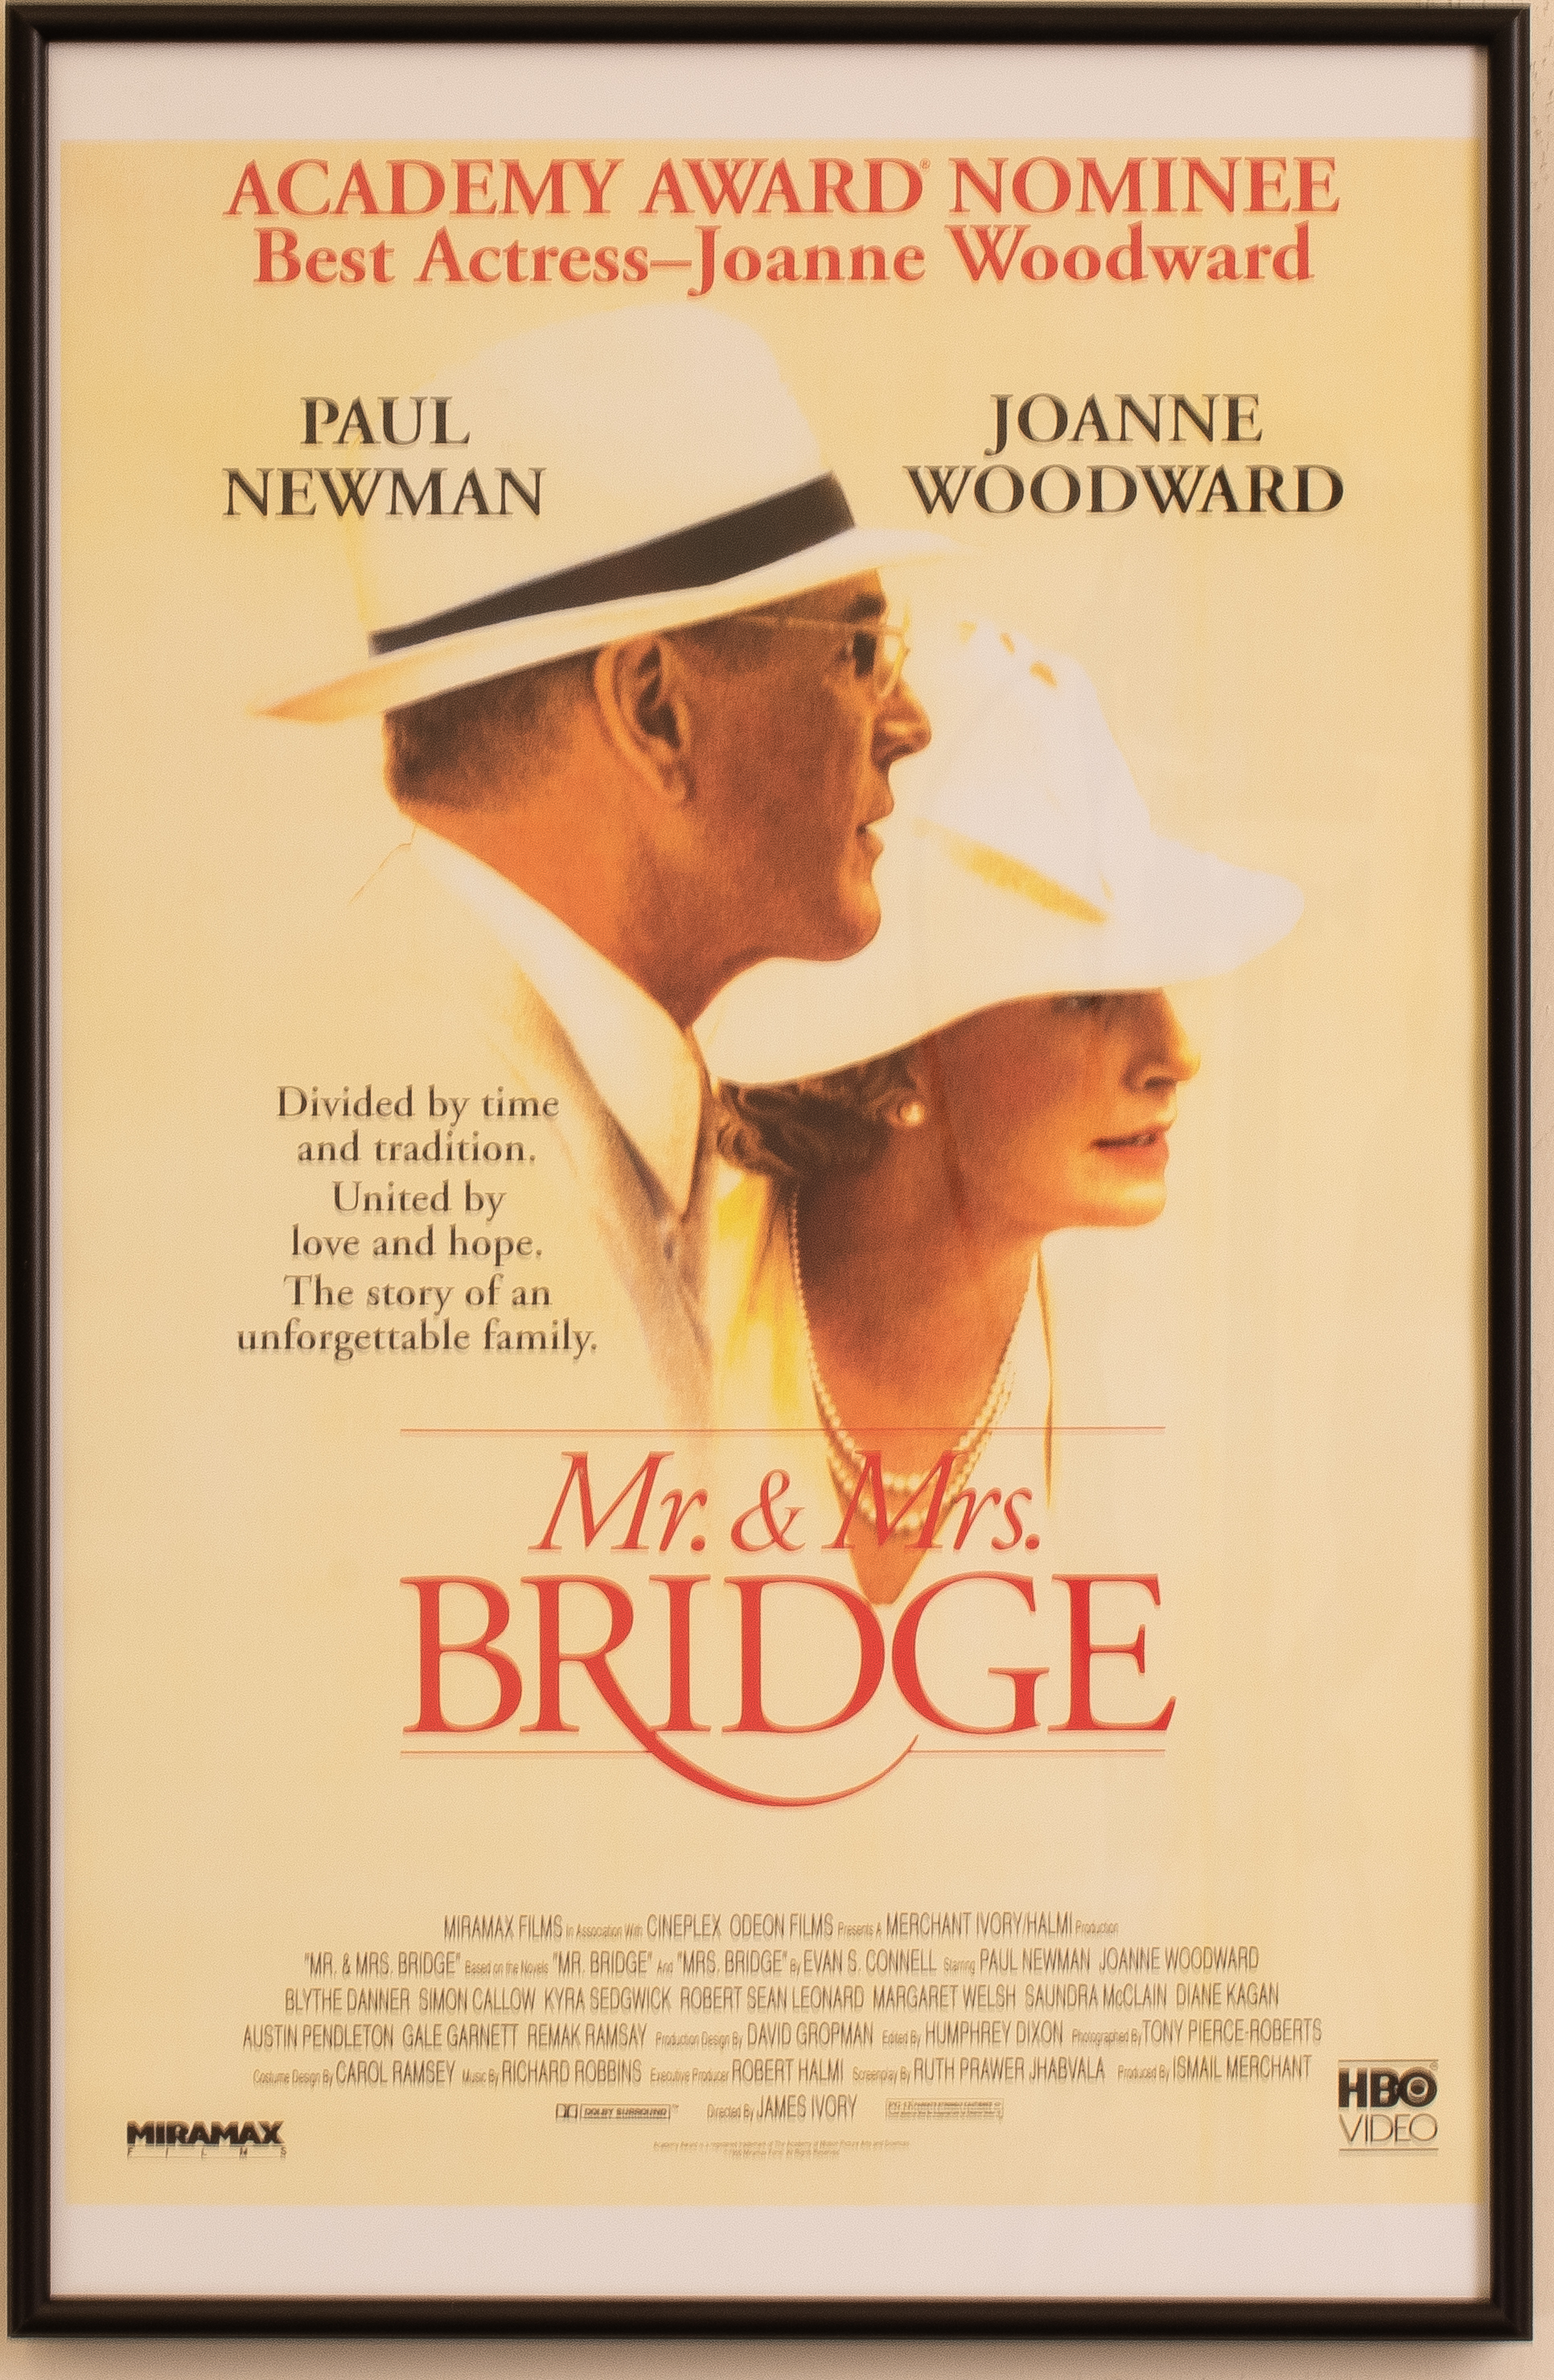 novel mrs bridge